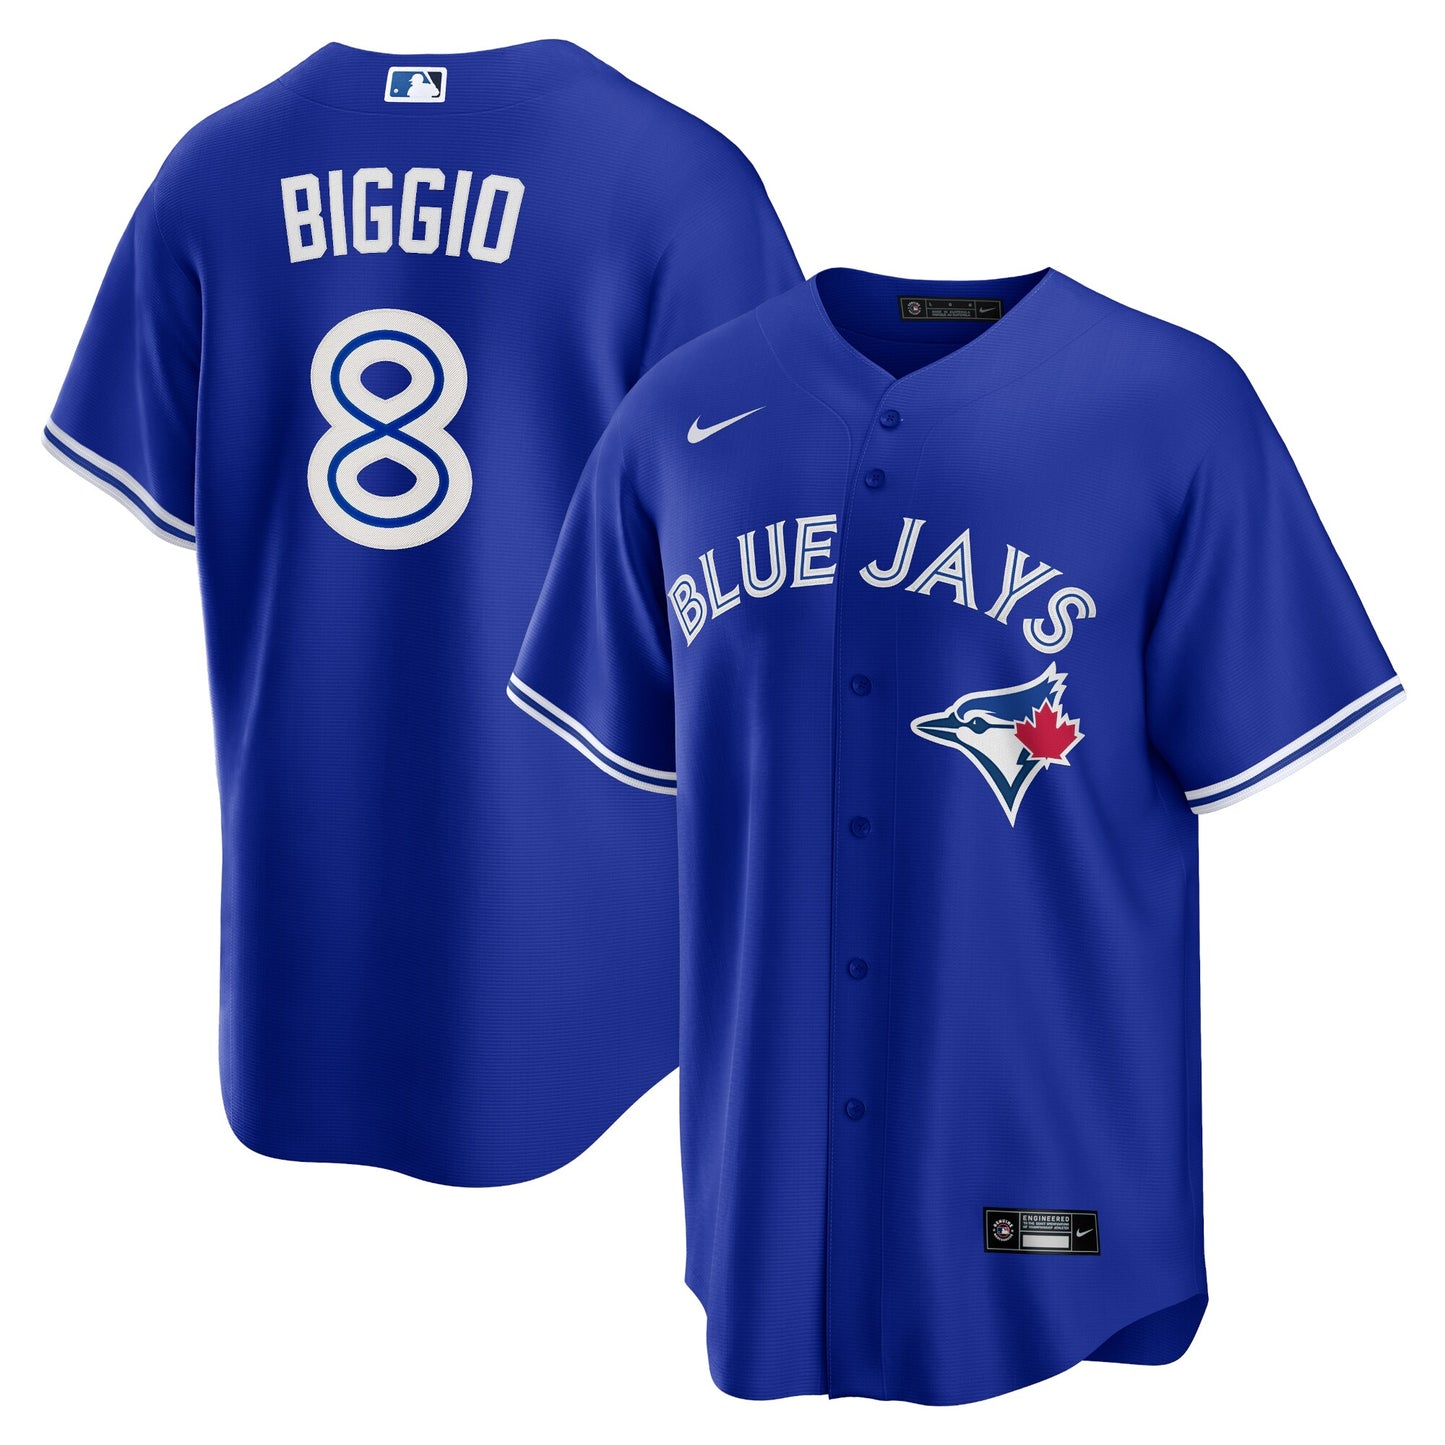 Cavan Biggio Toronto Blue Jays Nike Replica Player Name Jersey - Royal